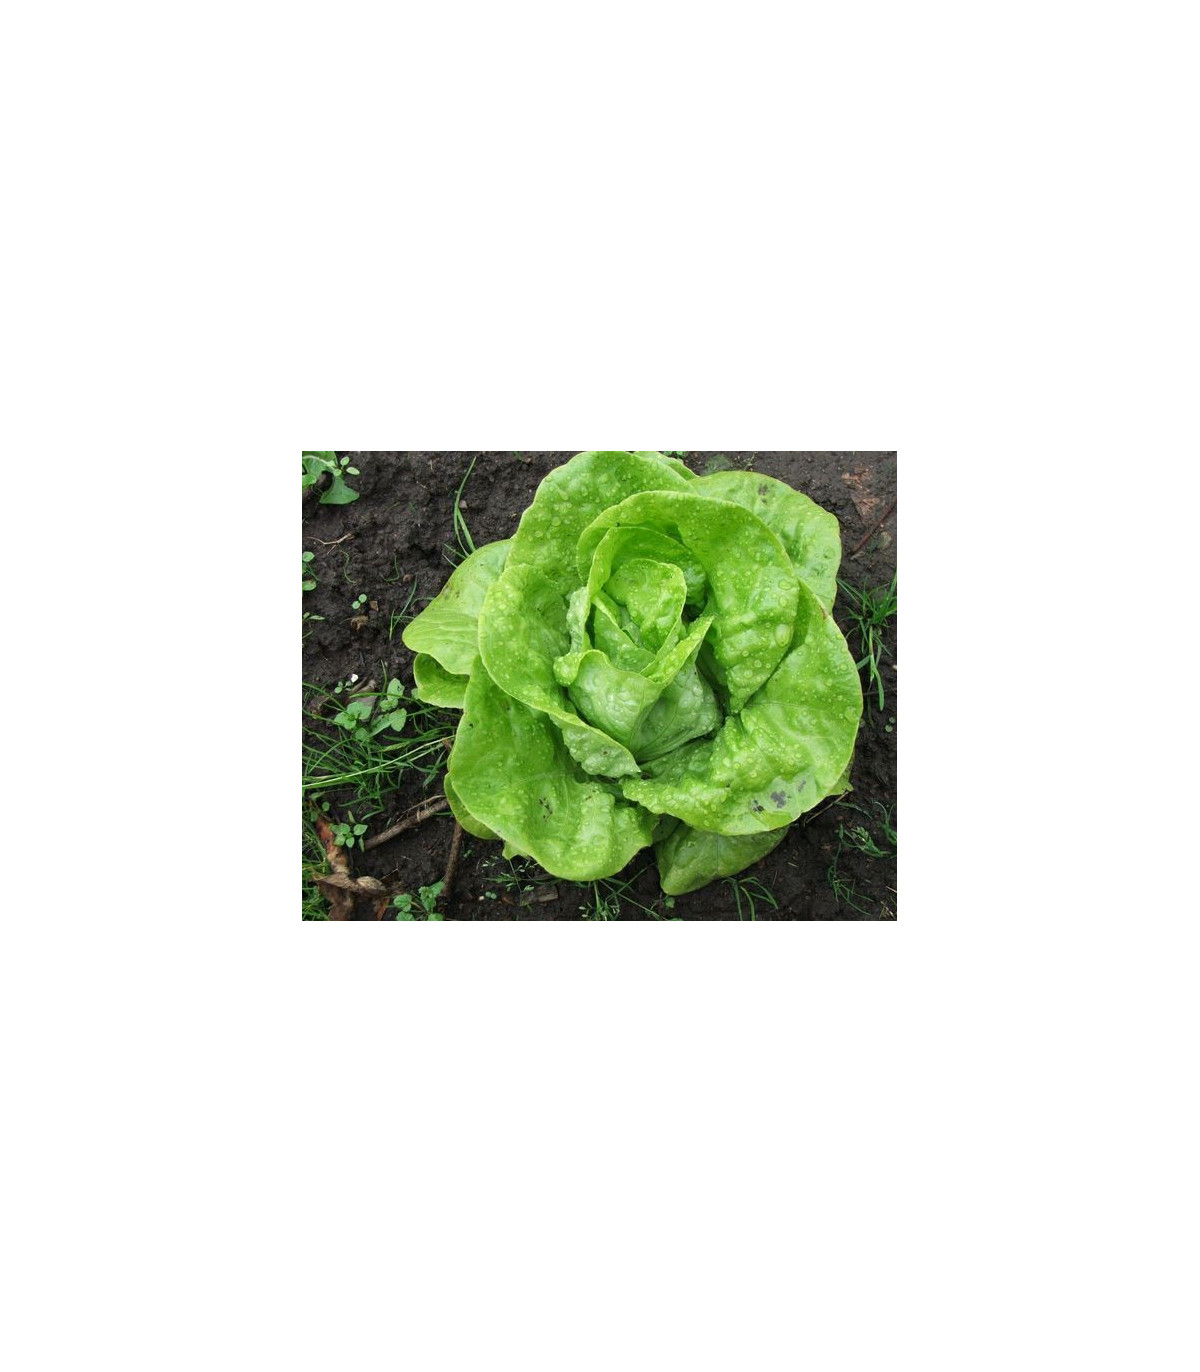 Salát hlávkový k rychlení- Lactusa sativa- semena salátu- 400 ks